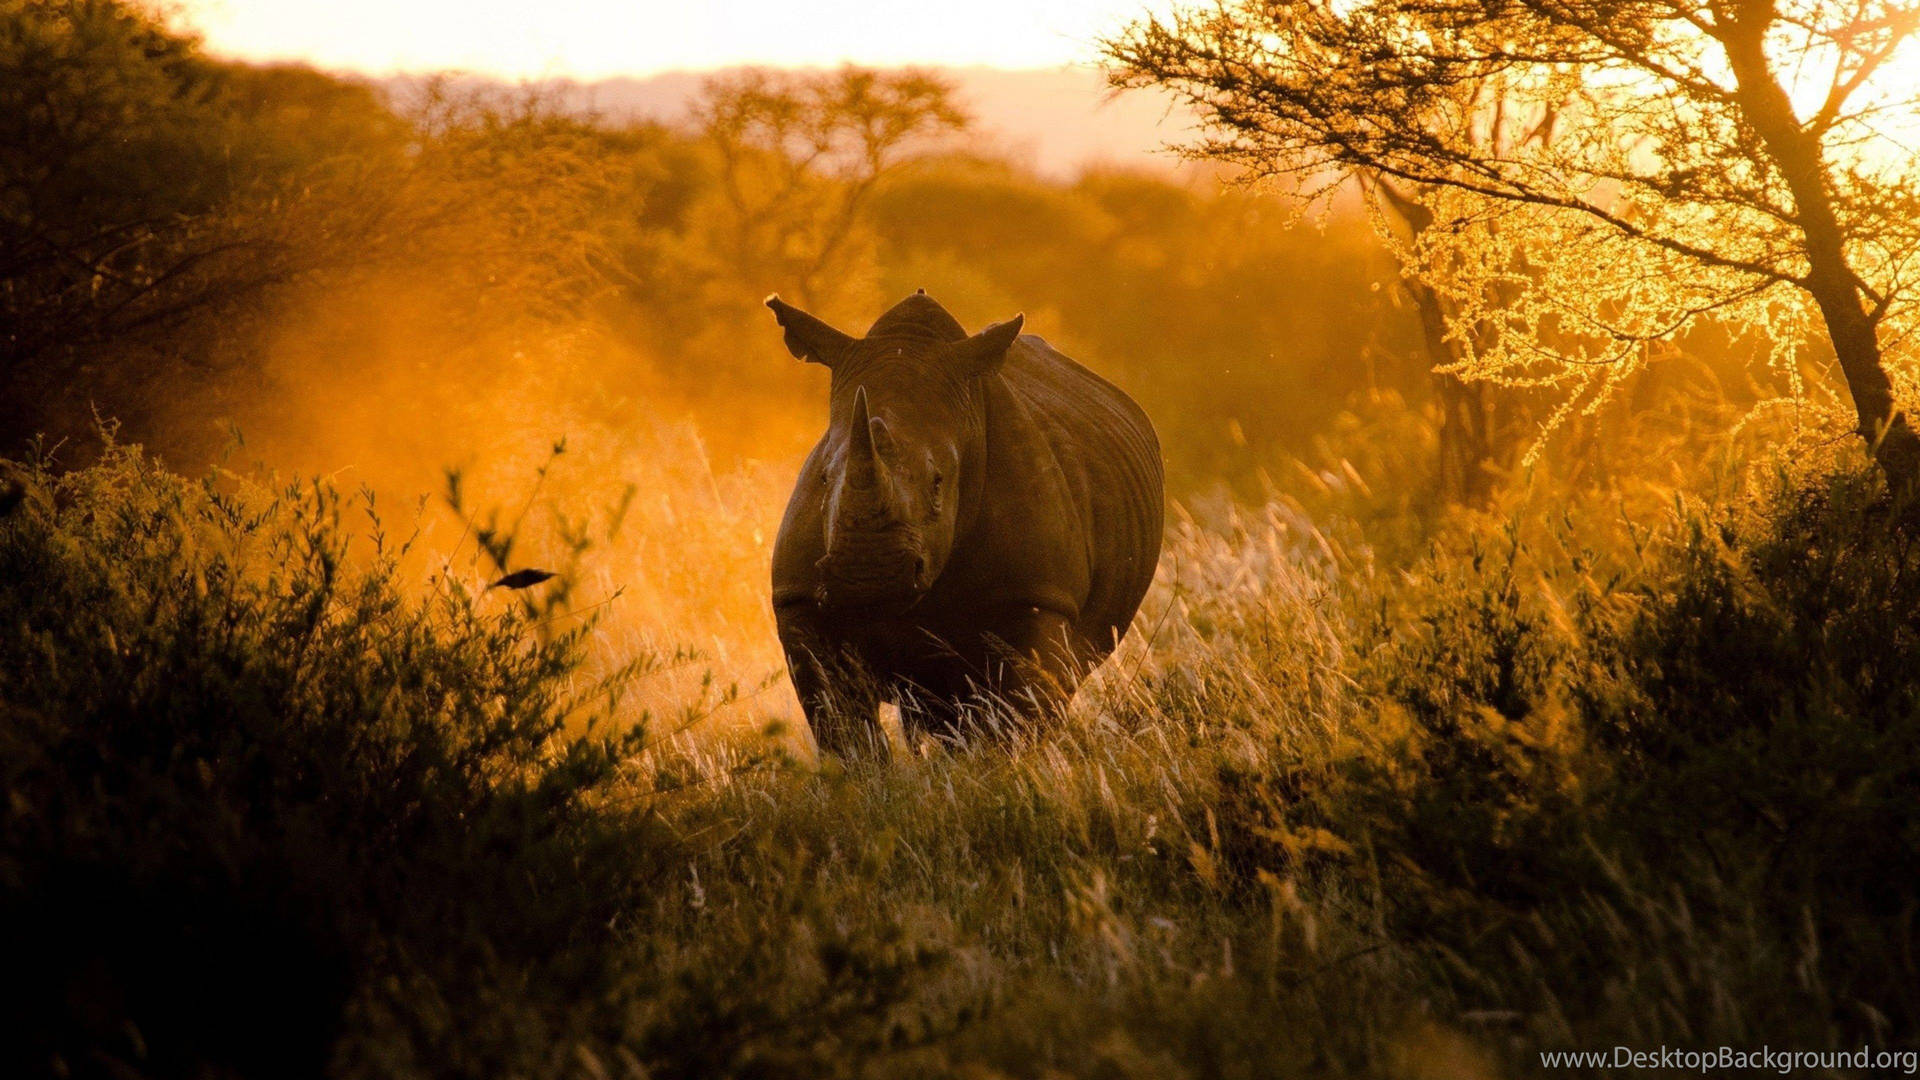 Rhino In Africa Wallpaper